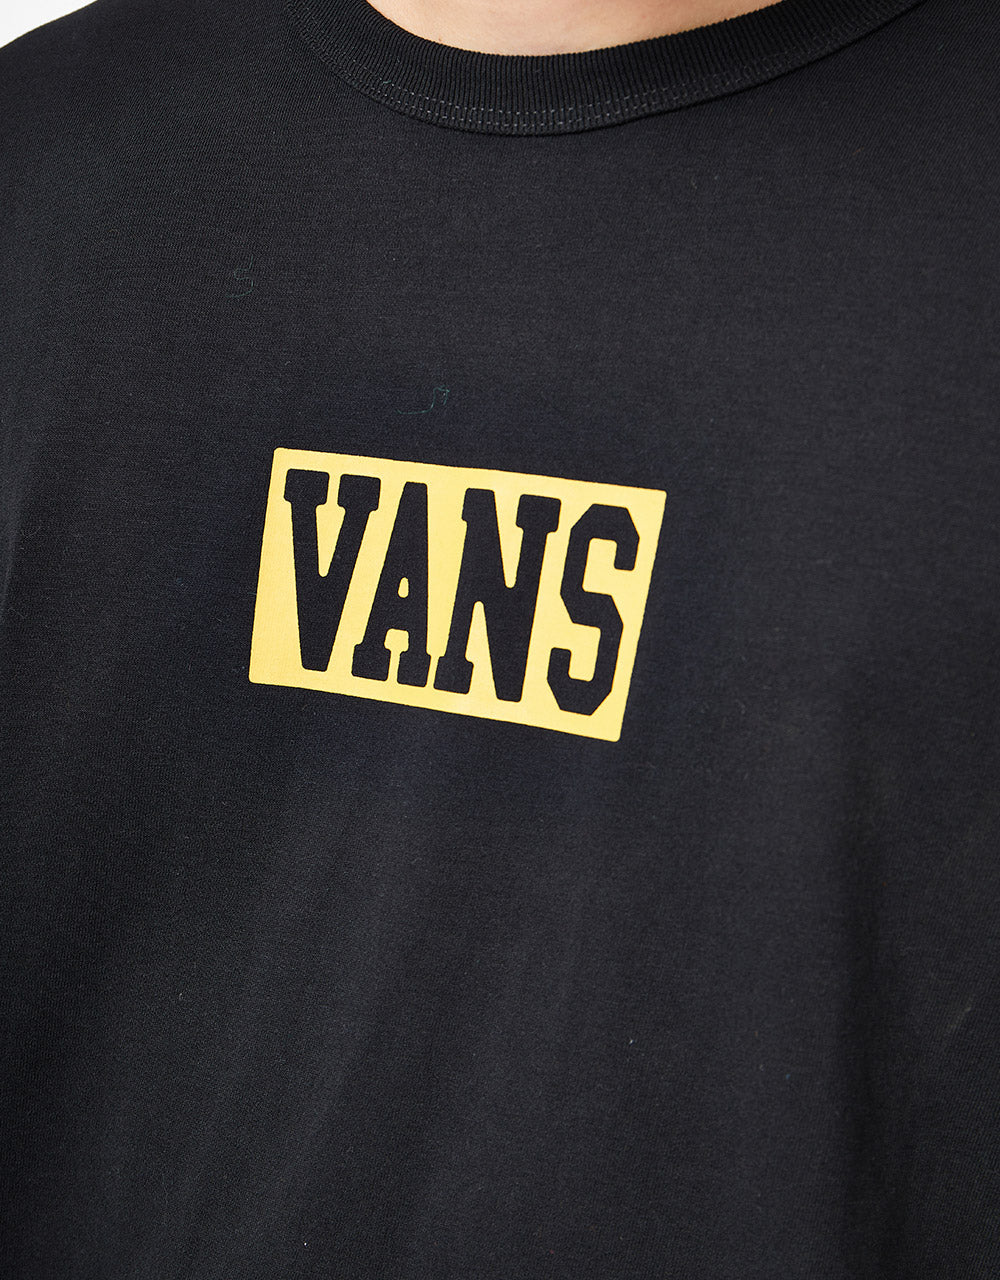 Vans Off The Wall Varsity L/S T-Shirt - Black